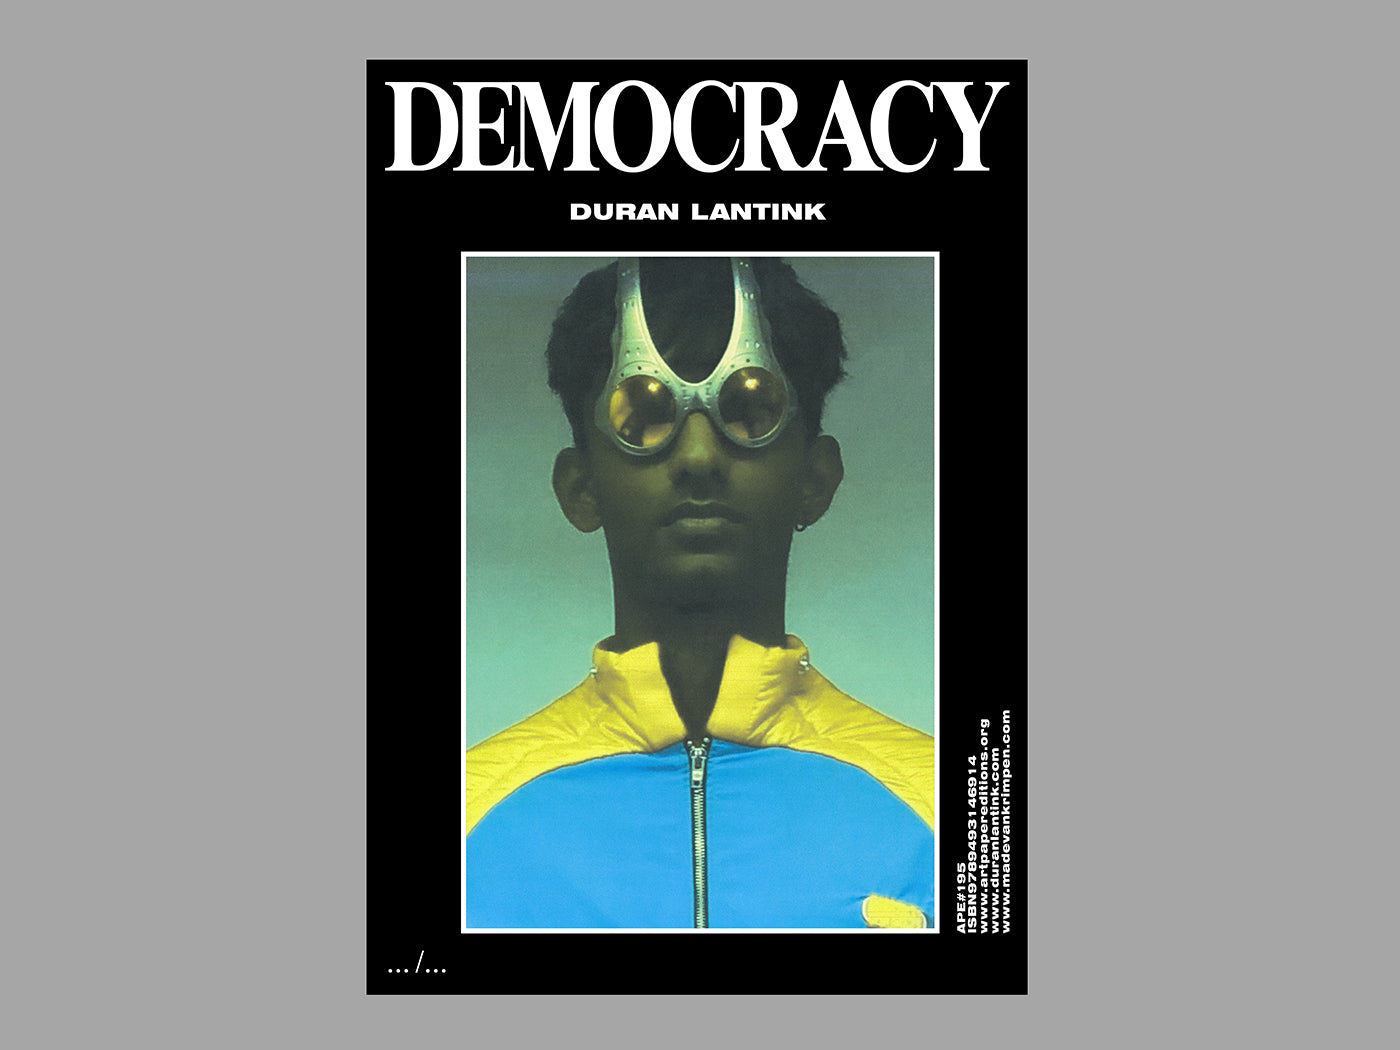 Democracy by Duran Lantink